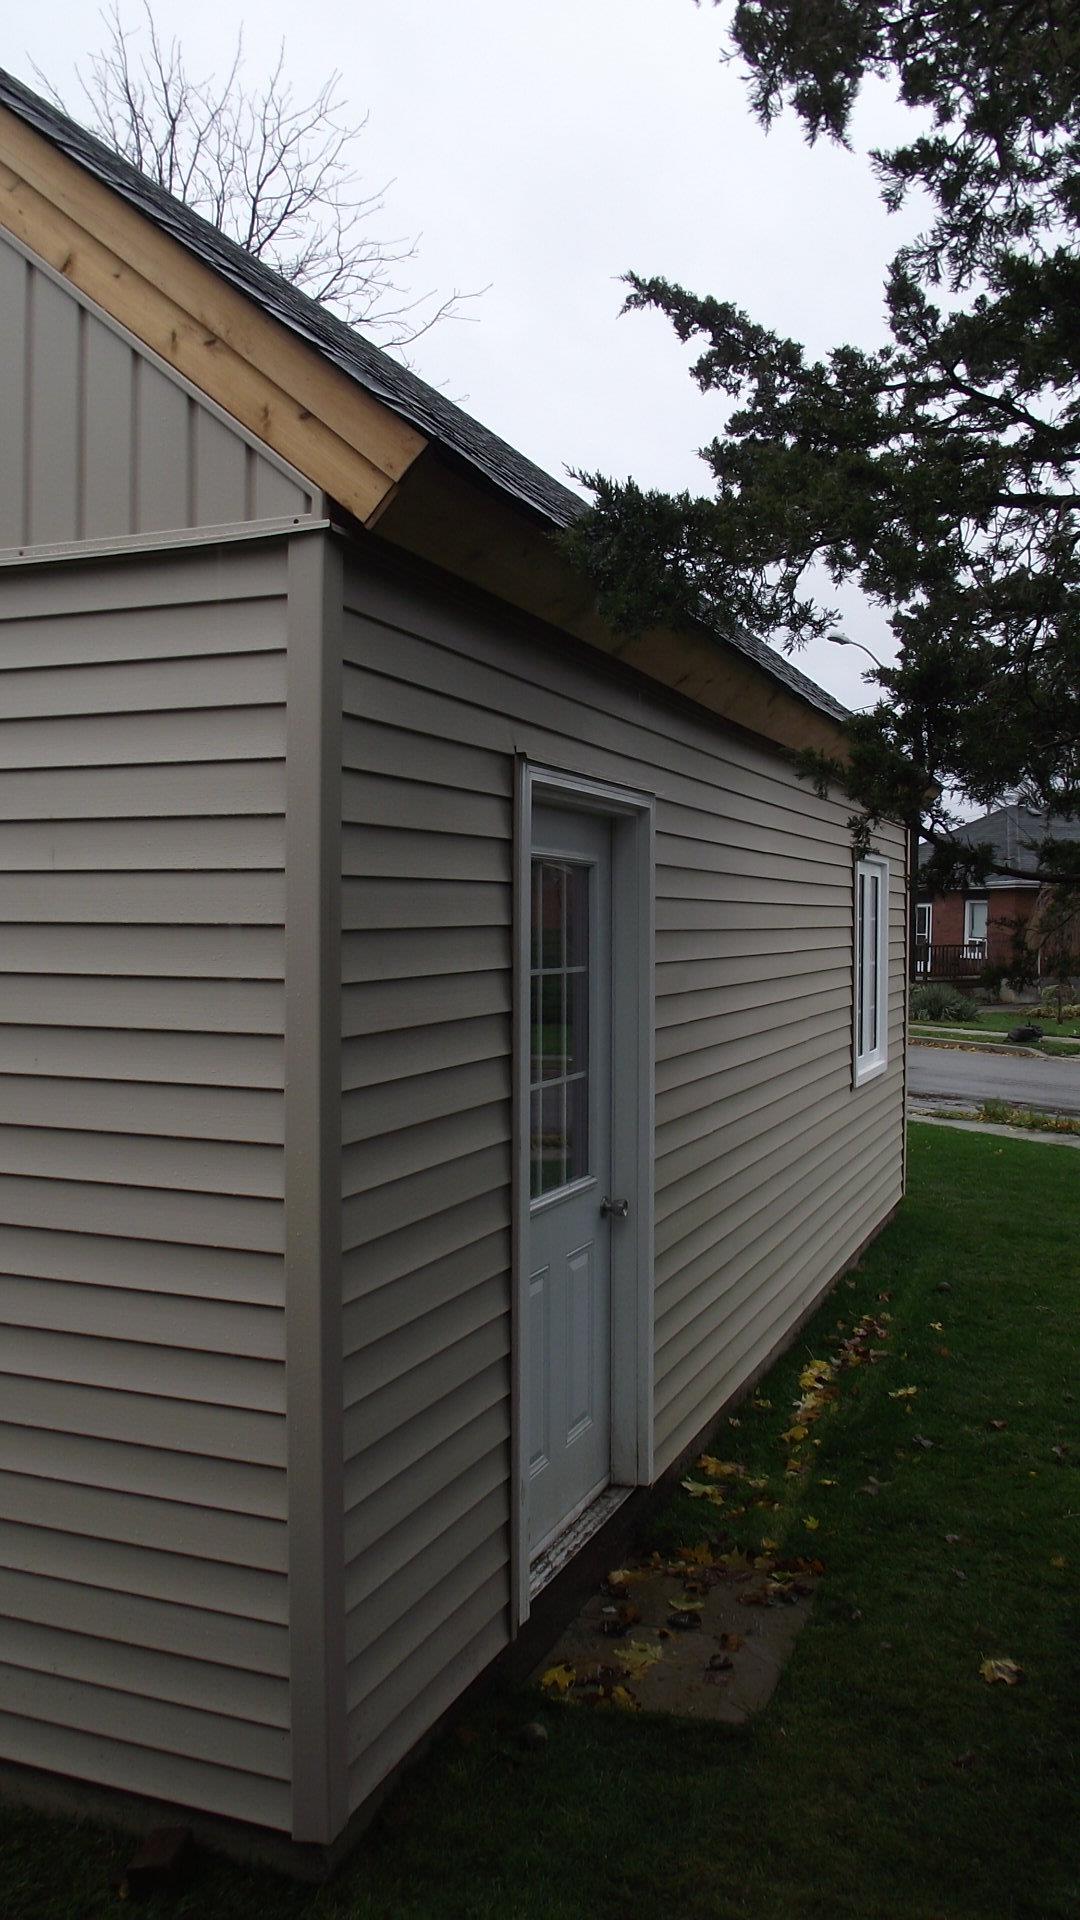 Montcrest garage kits 14x24 with double casment vinyl windows in Cambridge,Ontario.ID number 154973-